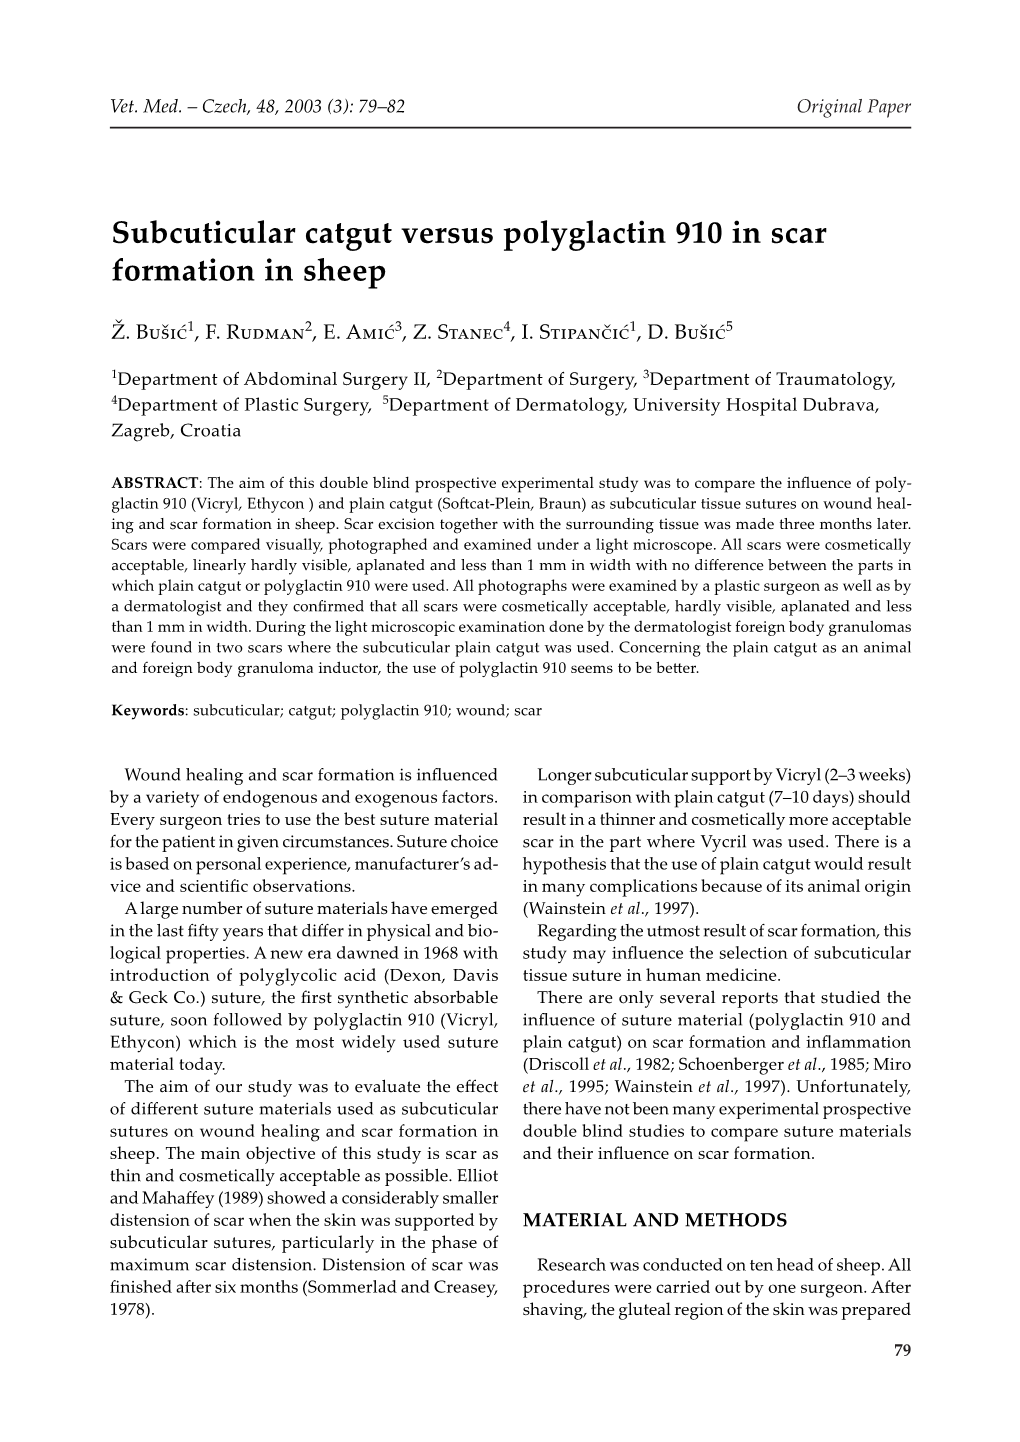 Subcuticular Catgut Versus Polyglactin 910 in Scar Formation in Sheep